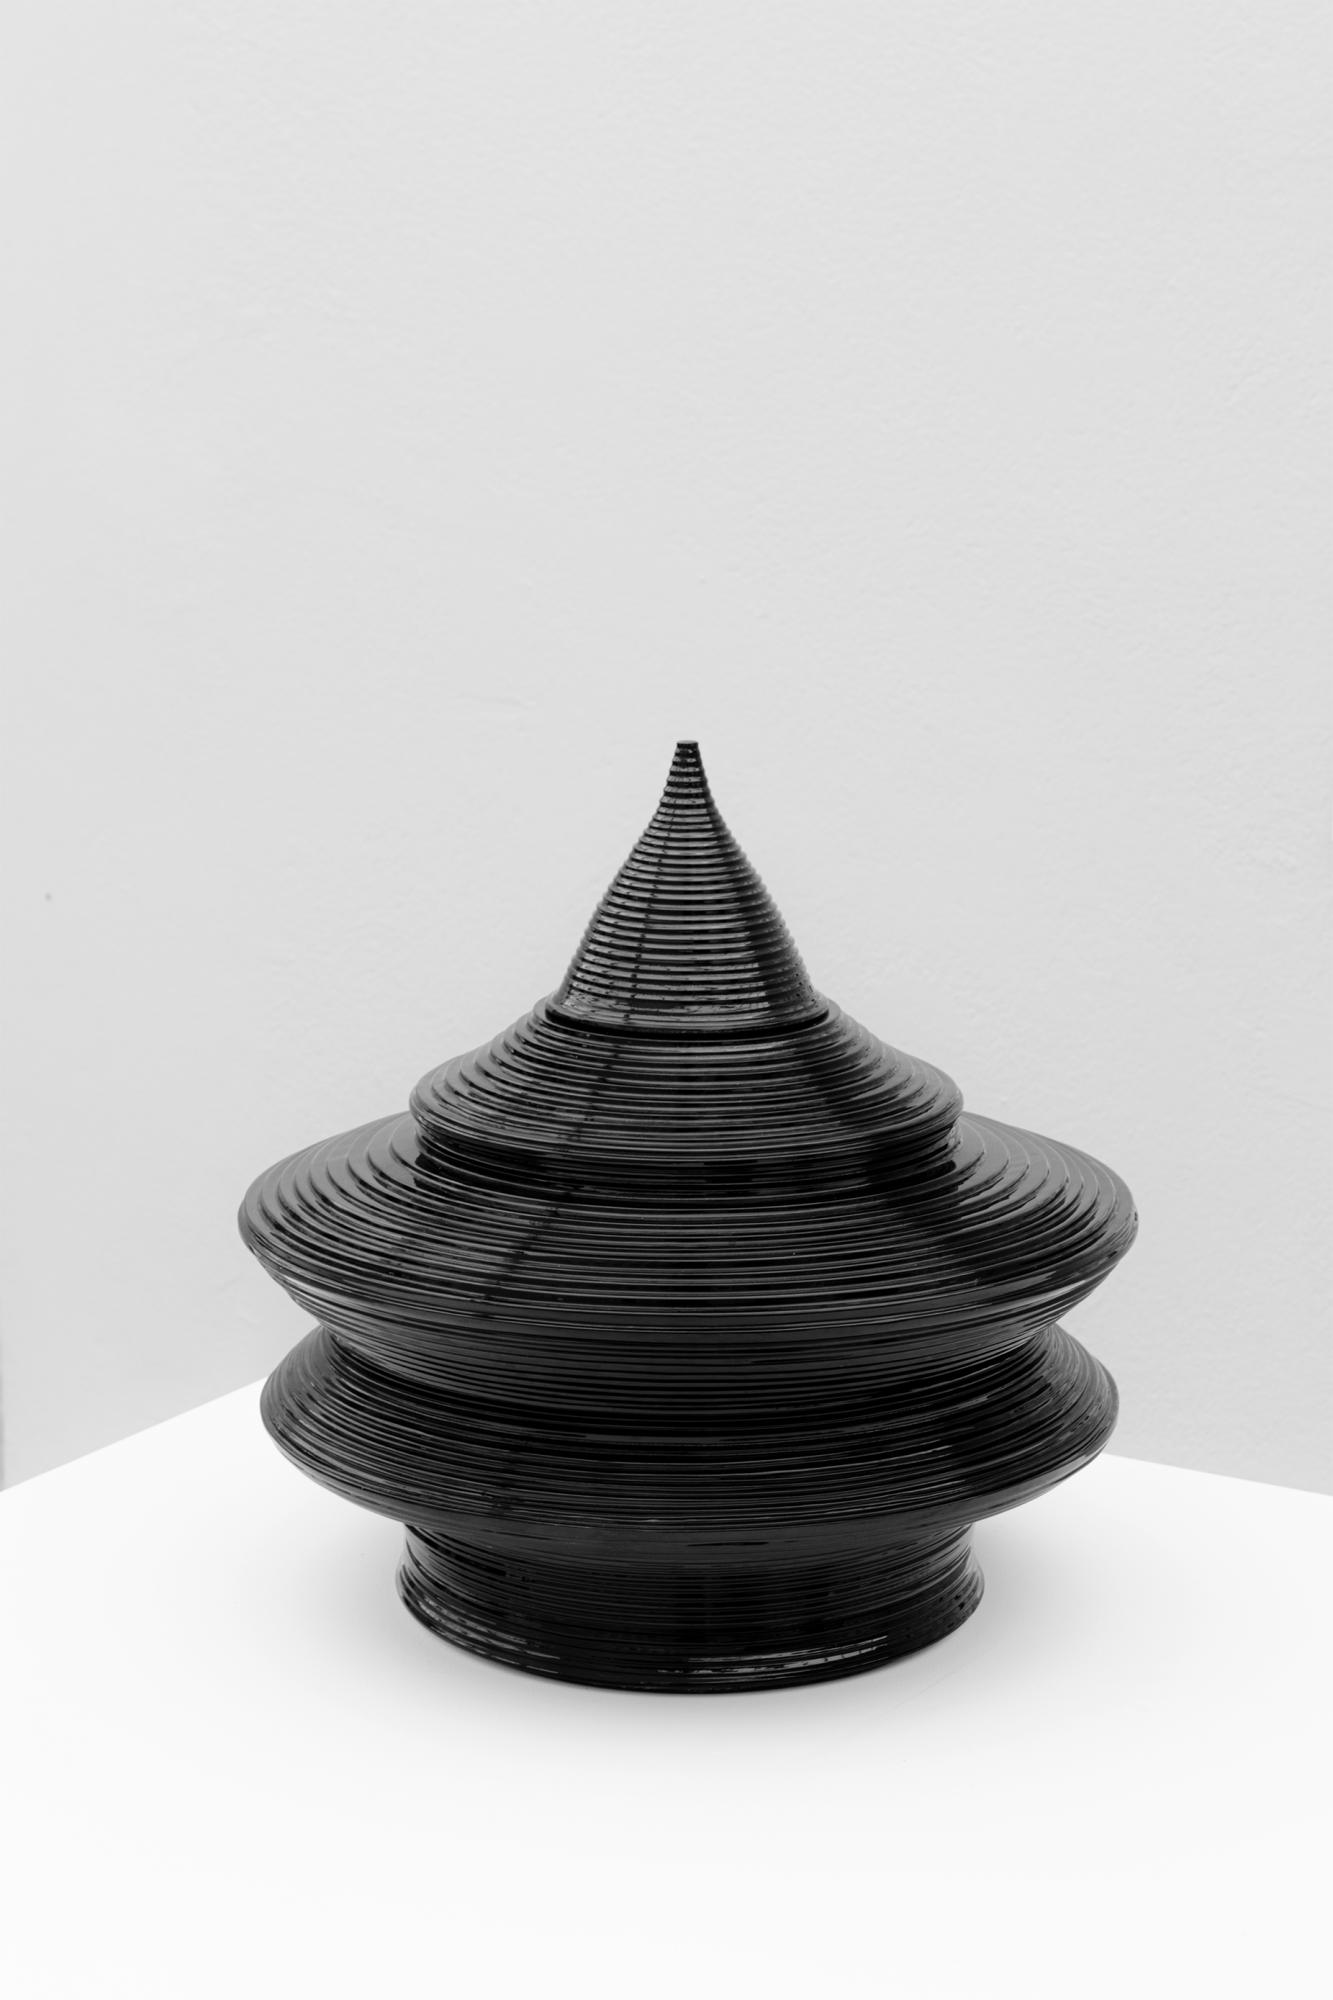 Mathieu Lehanneur | Age of the World, Ceramic Jars